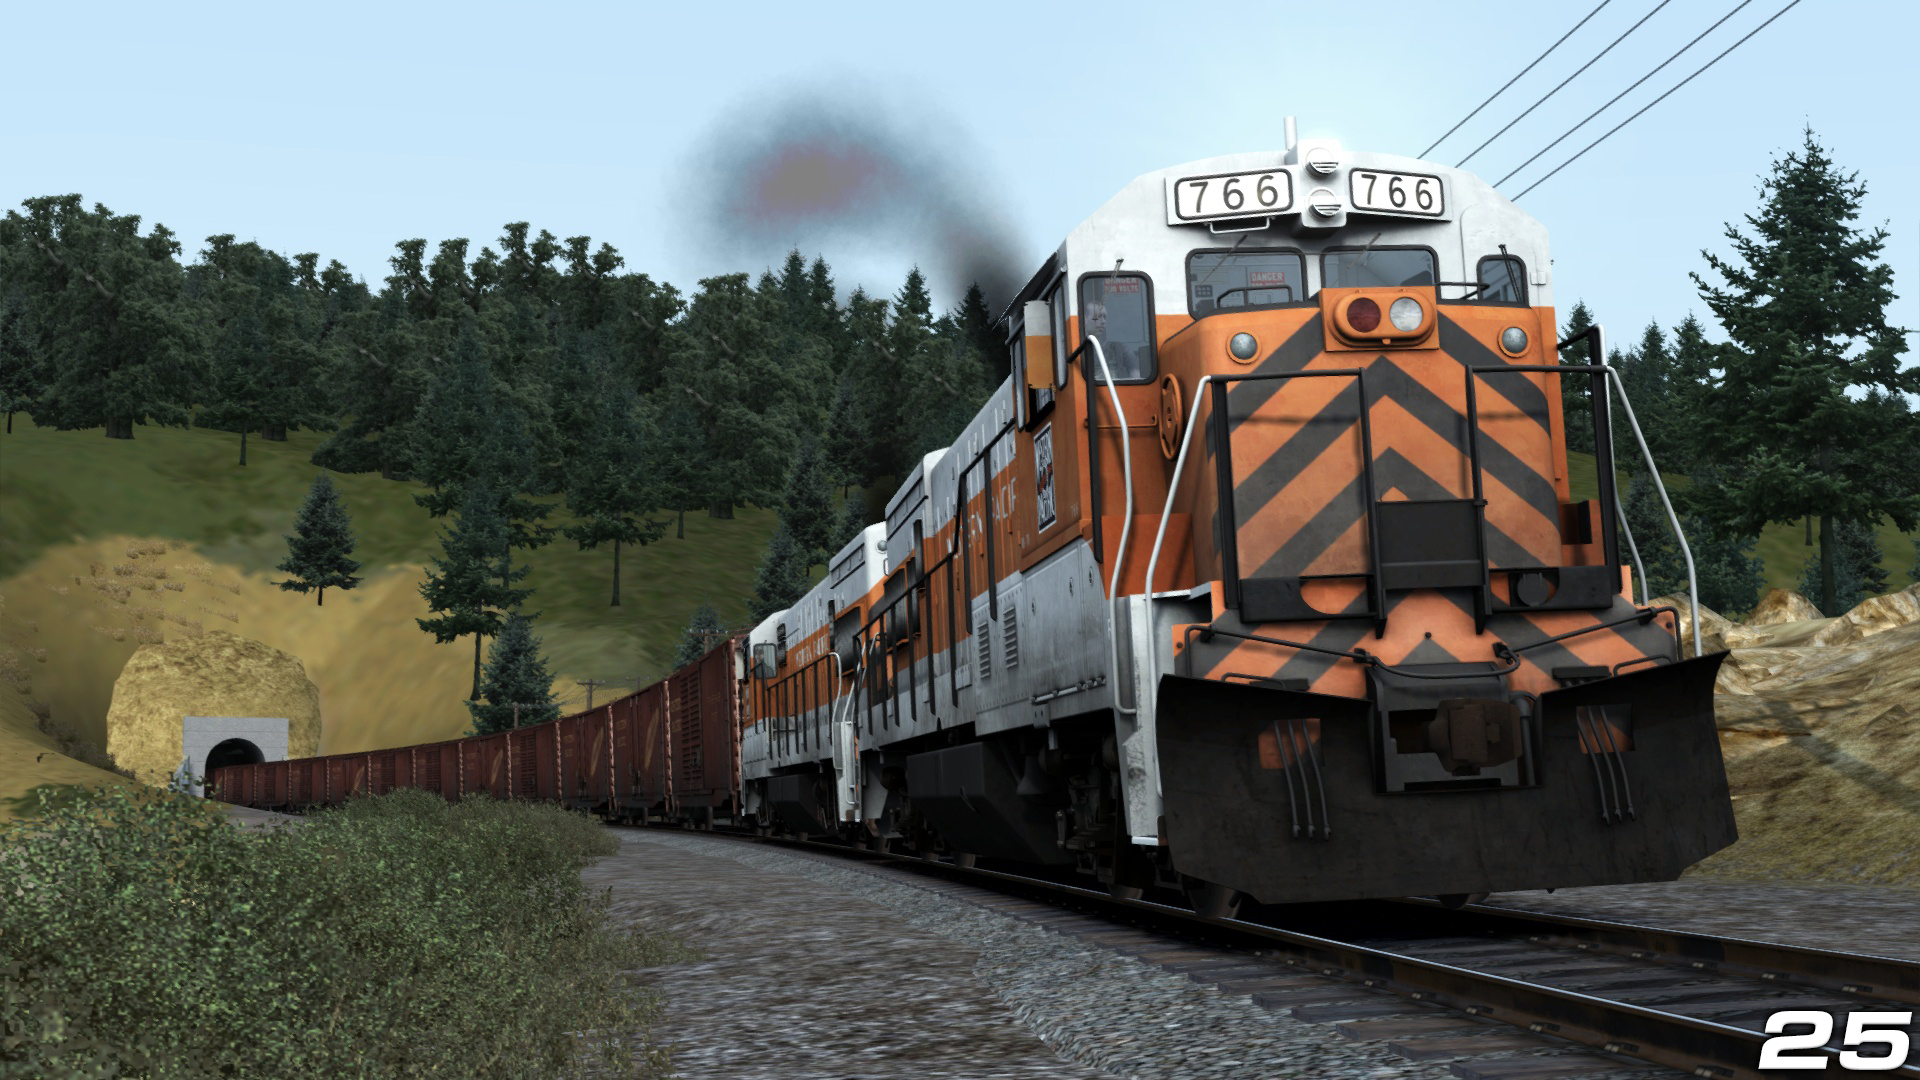 Railway (#3248139) - HD Wallpaper & Backgrounds Download